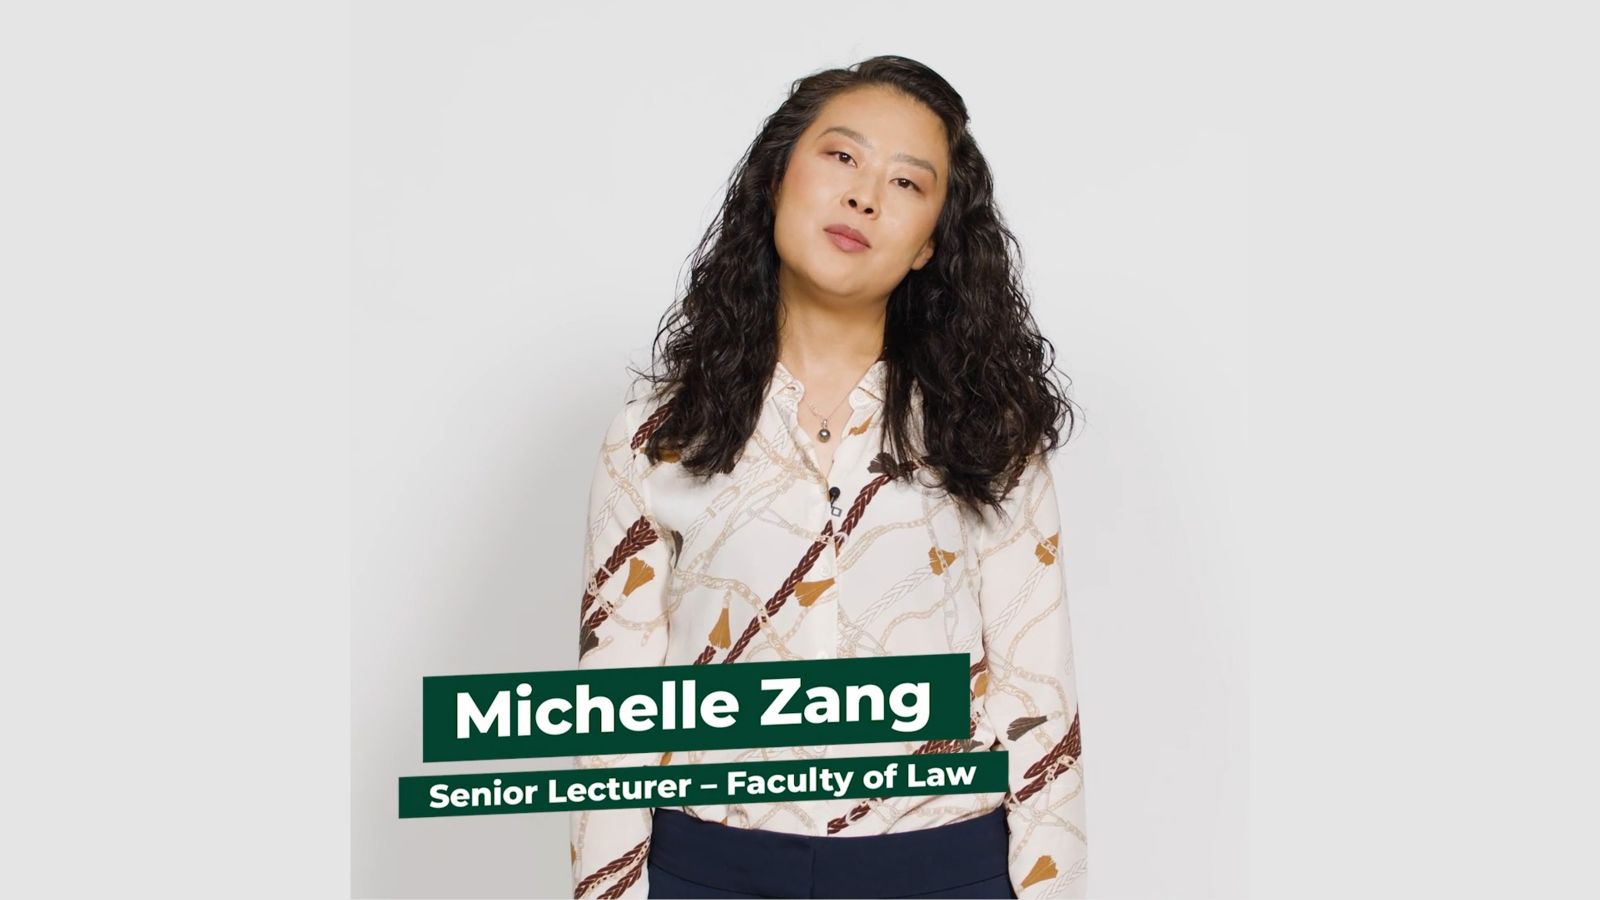 Dr Michelle Zang